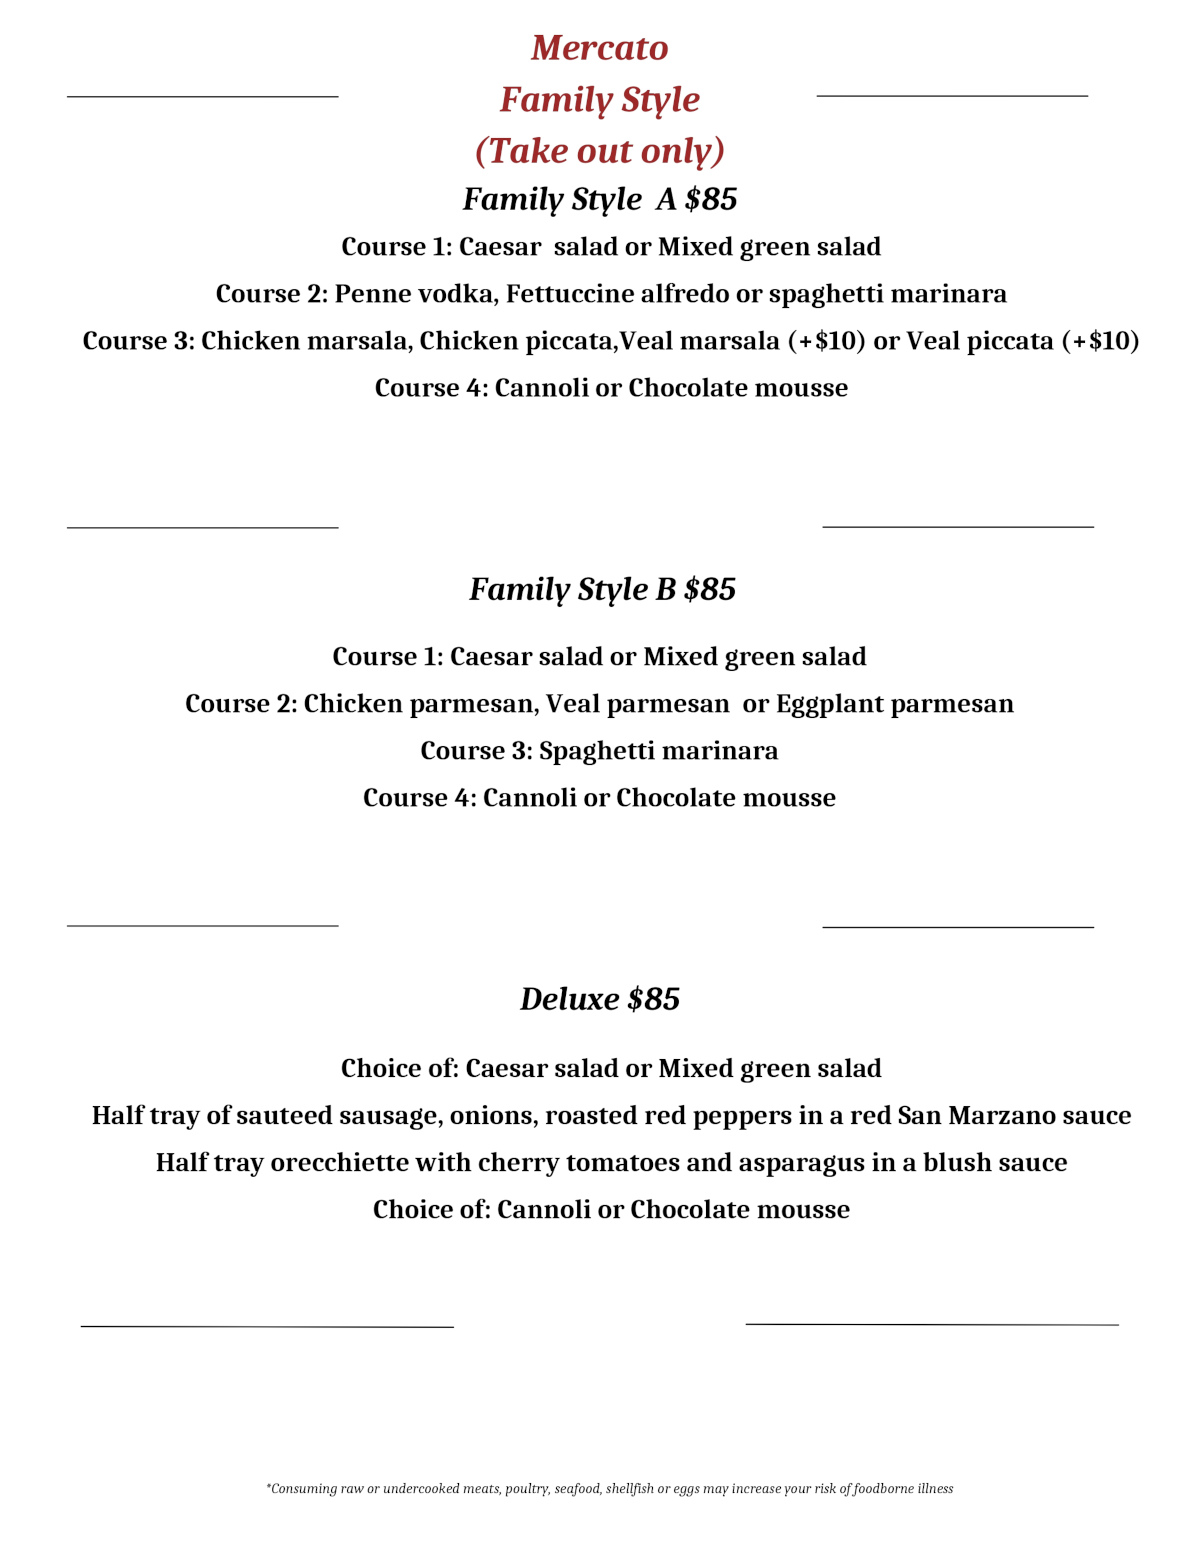 Family Style menu